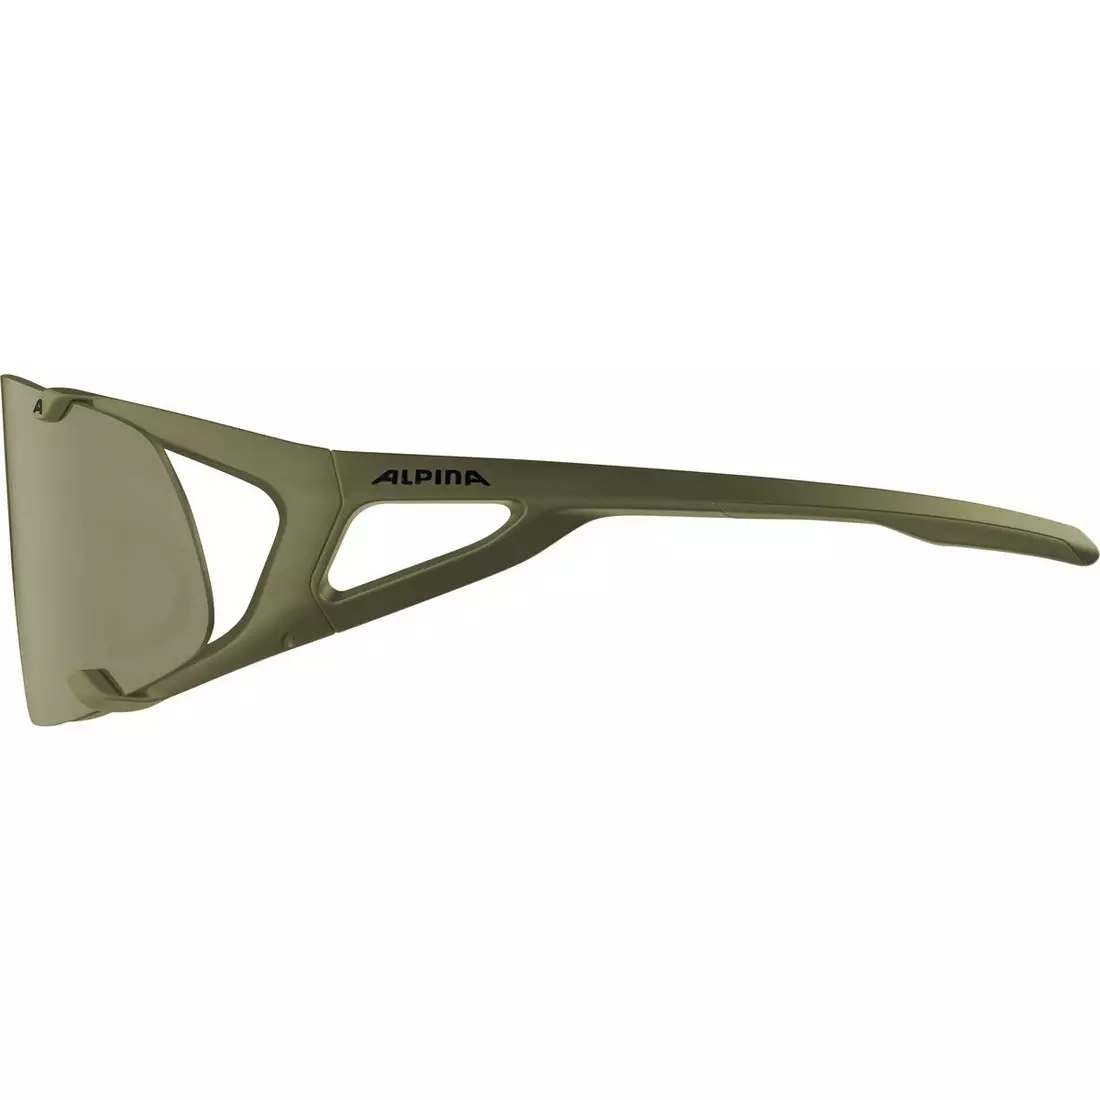 ALPINA HAWKEYE Q-LITE Polarized sports glasses OLIVE MATT MIRROR SILVER 